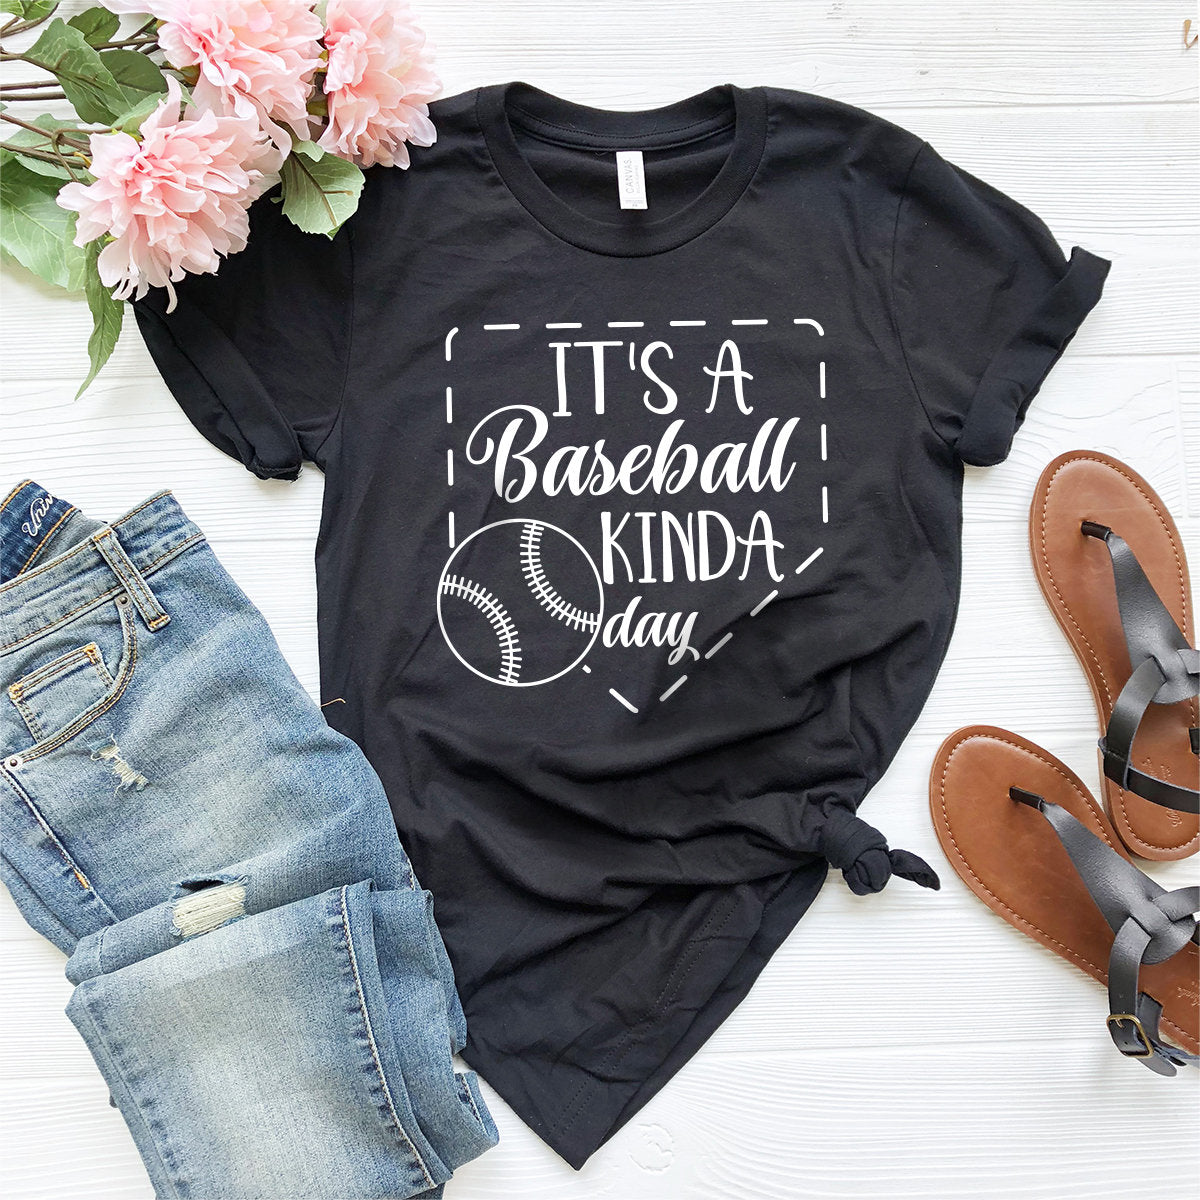 It's A Baseball Kinda Day T-Shirt, Baseball Shirt, Baseball Game Day Tee, Baseball Tshirt, Baseball Life Shirt, Baseball Lover T Shirt - Fastdeliverytees.com